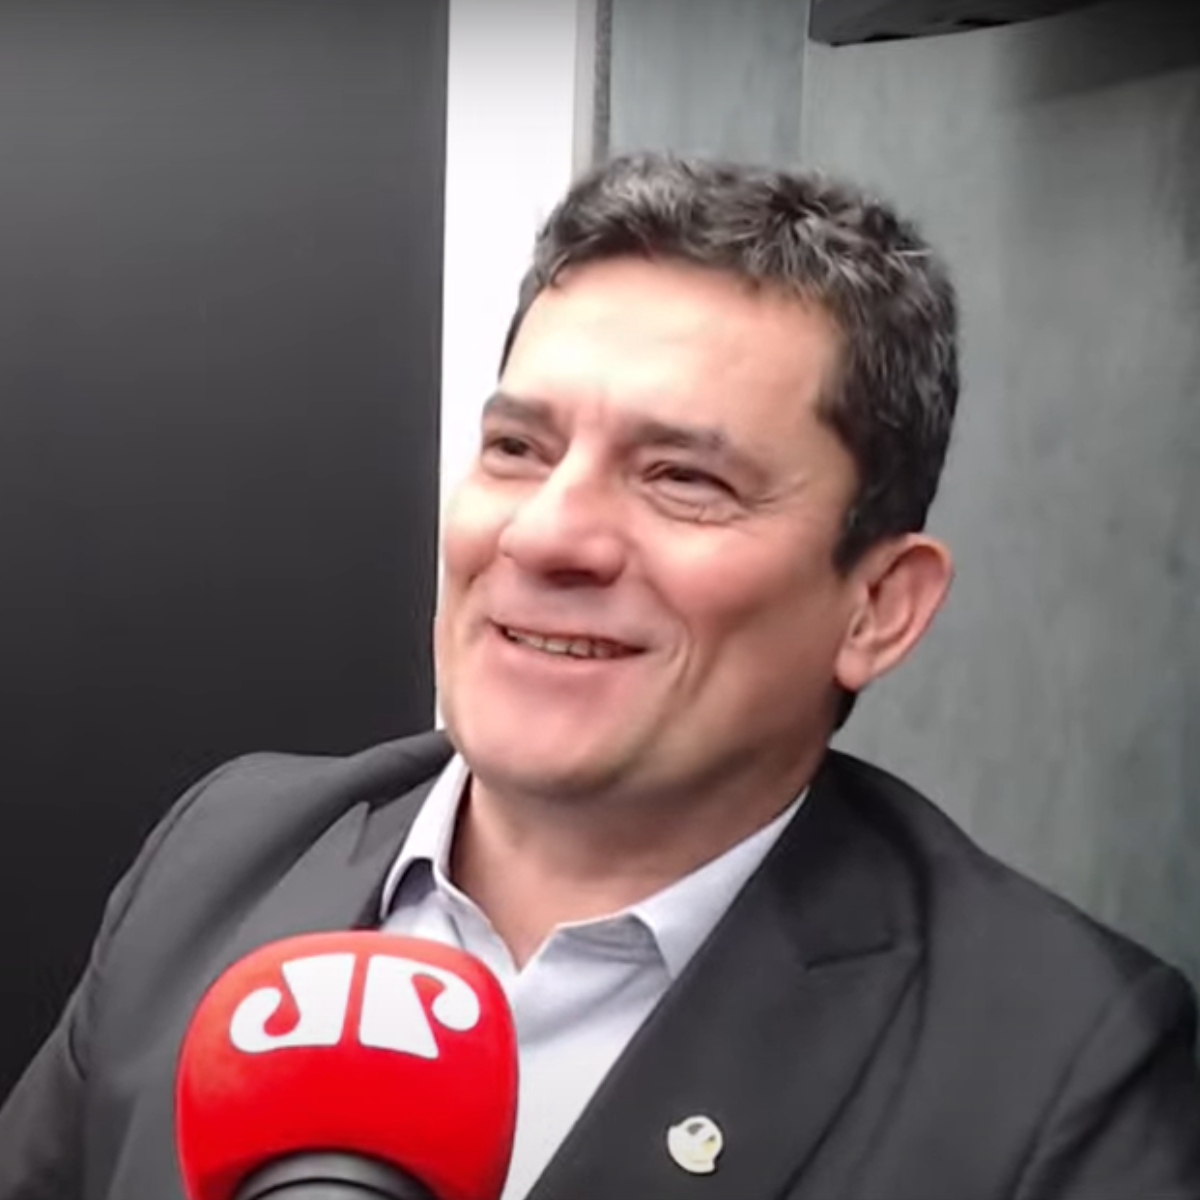  Sérgio Moro fala sobre candidatura de Deltan Dallagnol à prefeitura de Curitiba ou ao governo do Estado 